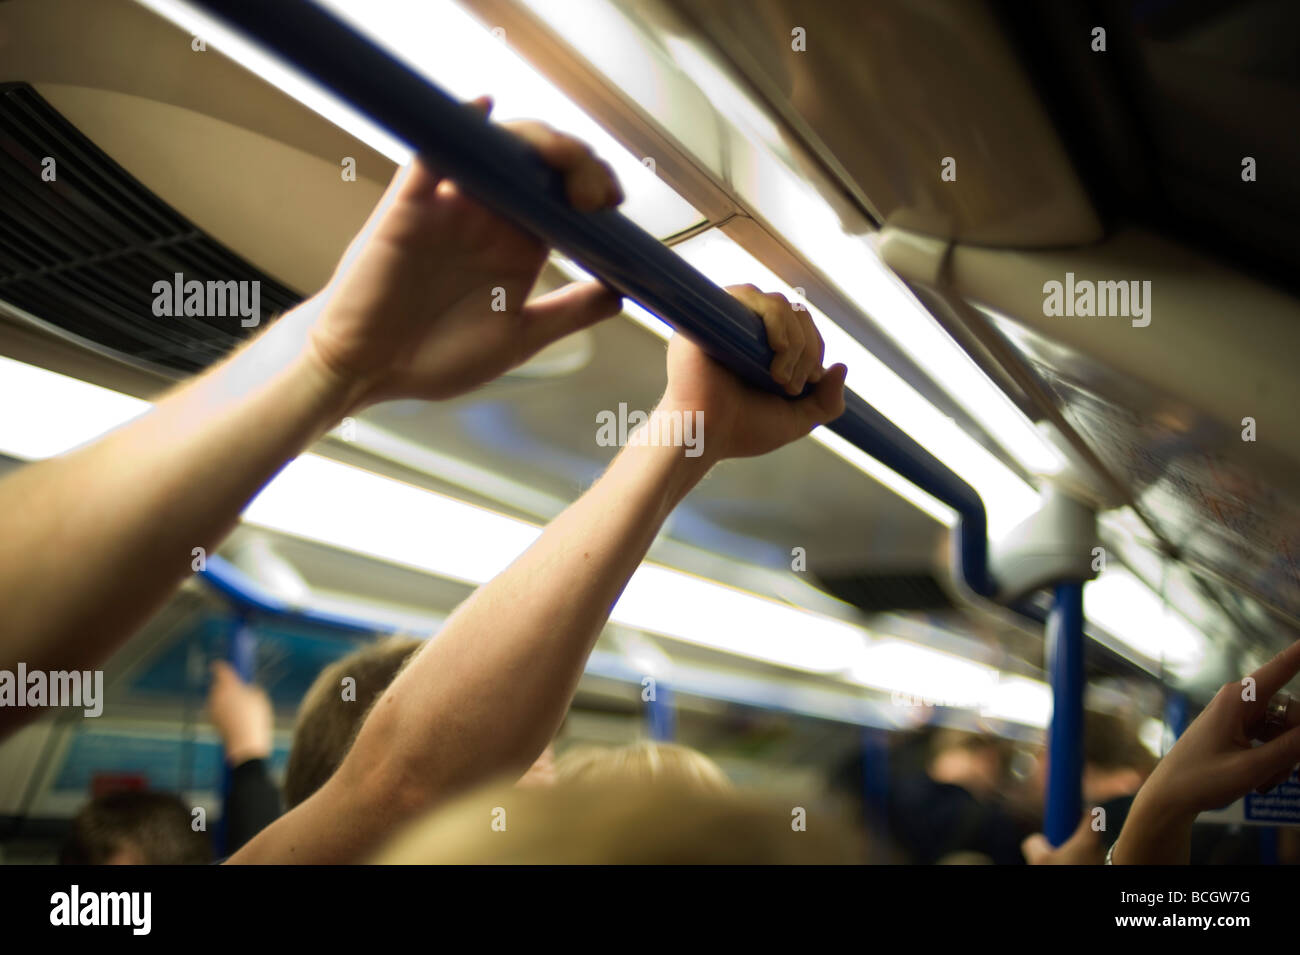 Metro de Londres Viajes comute aplastar hacinamiento Piccadilly line caliente órganos straphanging sudor huele toque calor Foto de stock